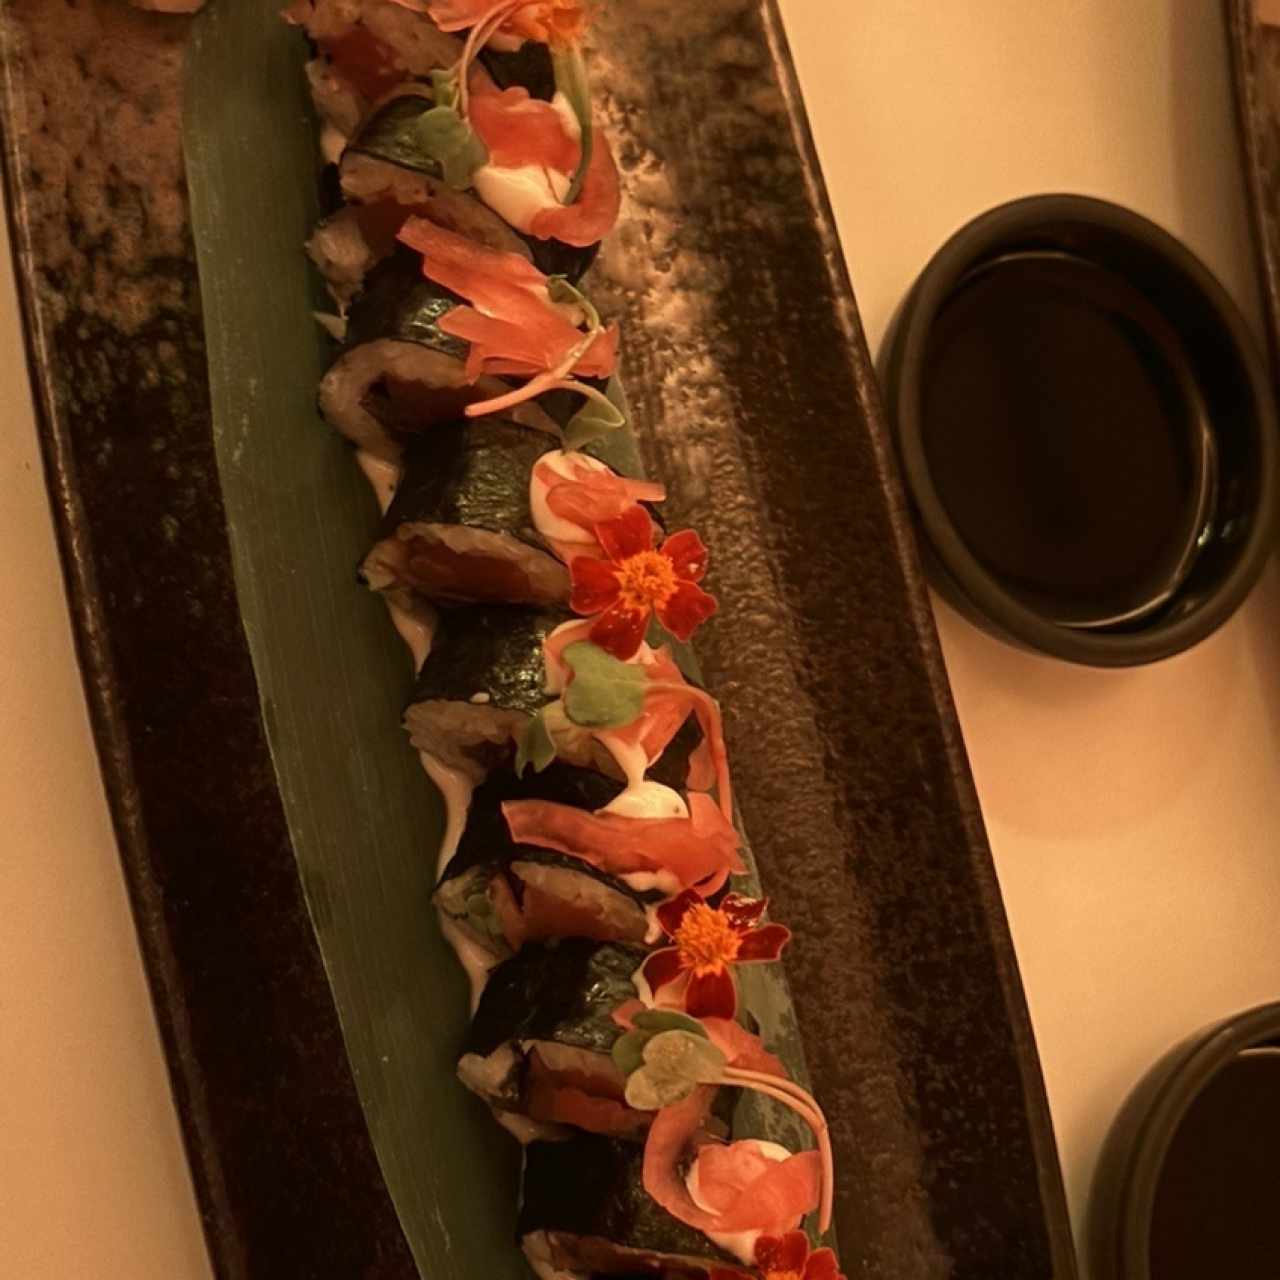 Sushi - Hosomaki Atún